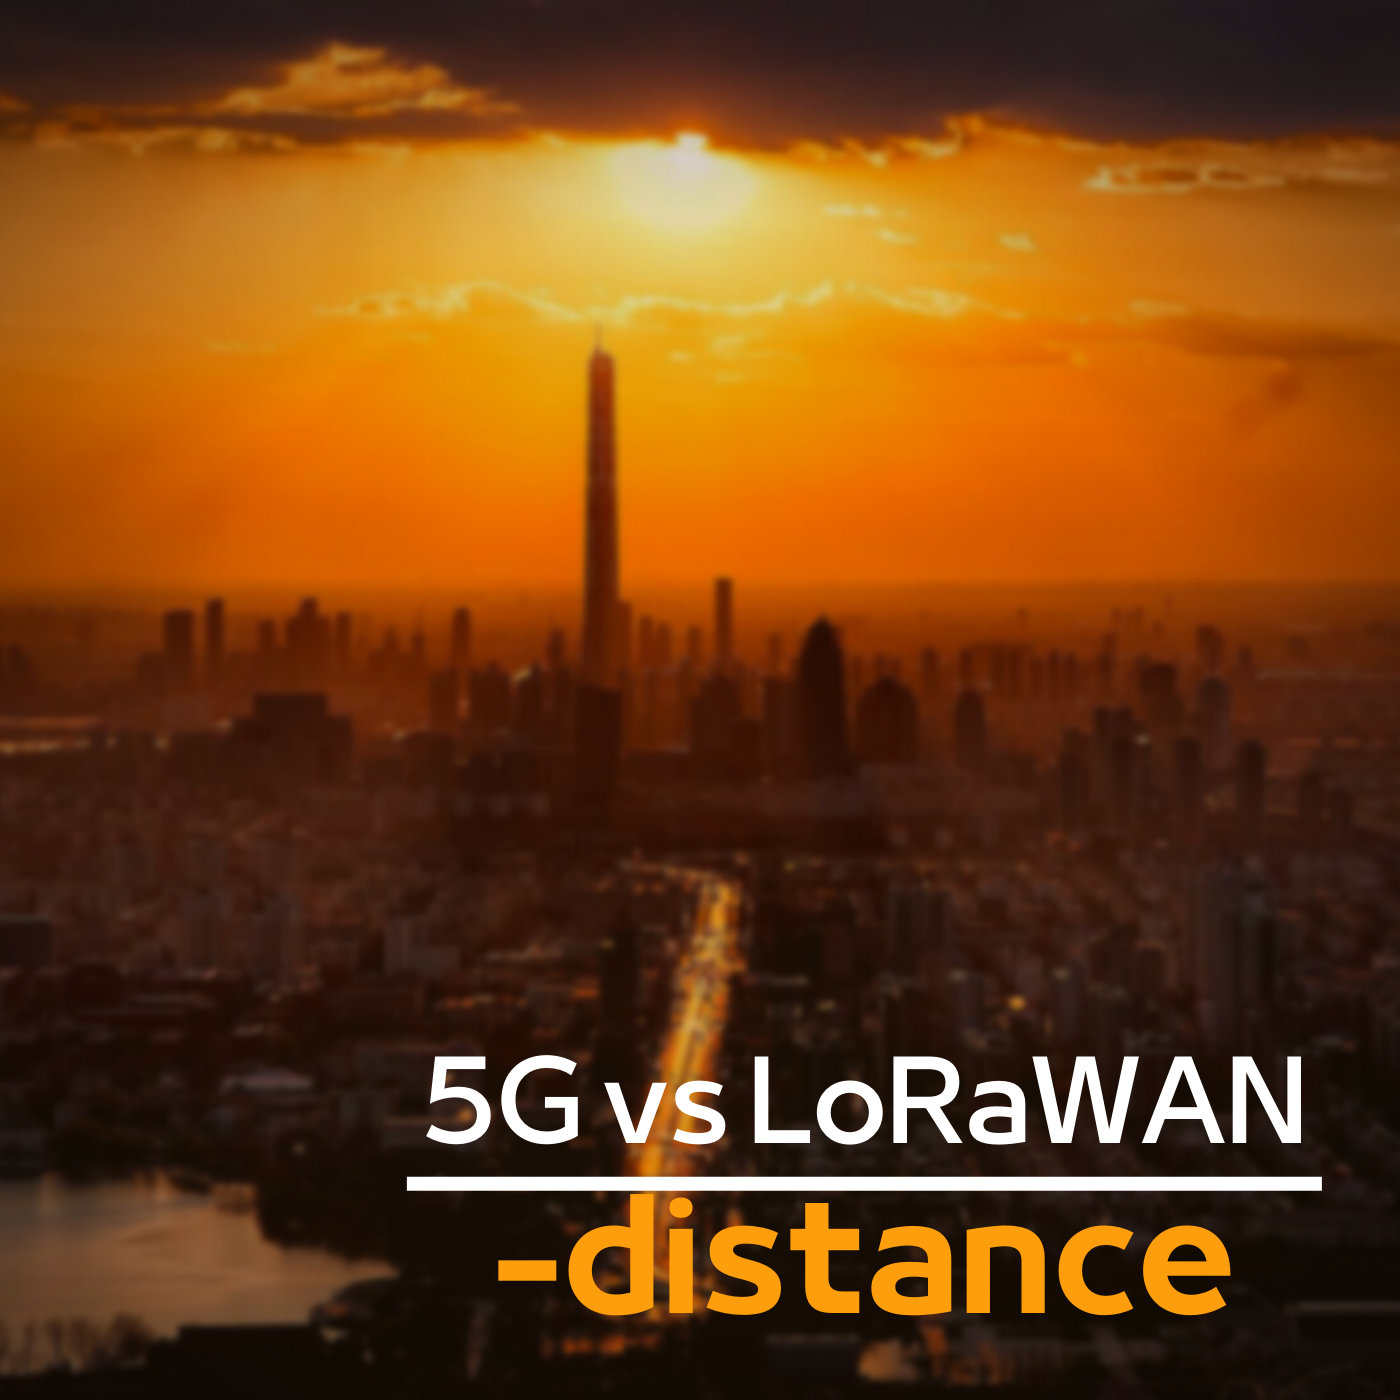 5G vs LoRaWAN distance